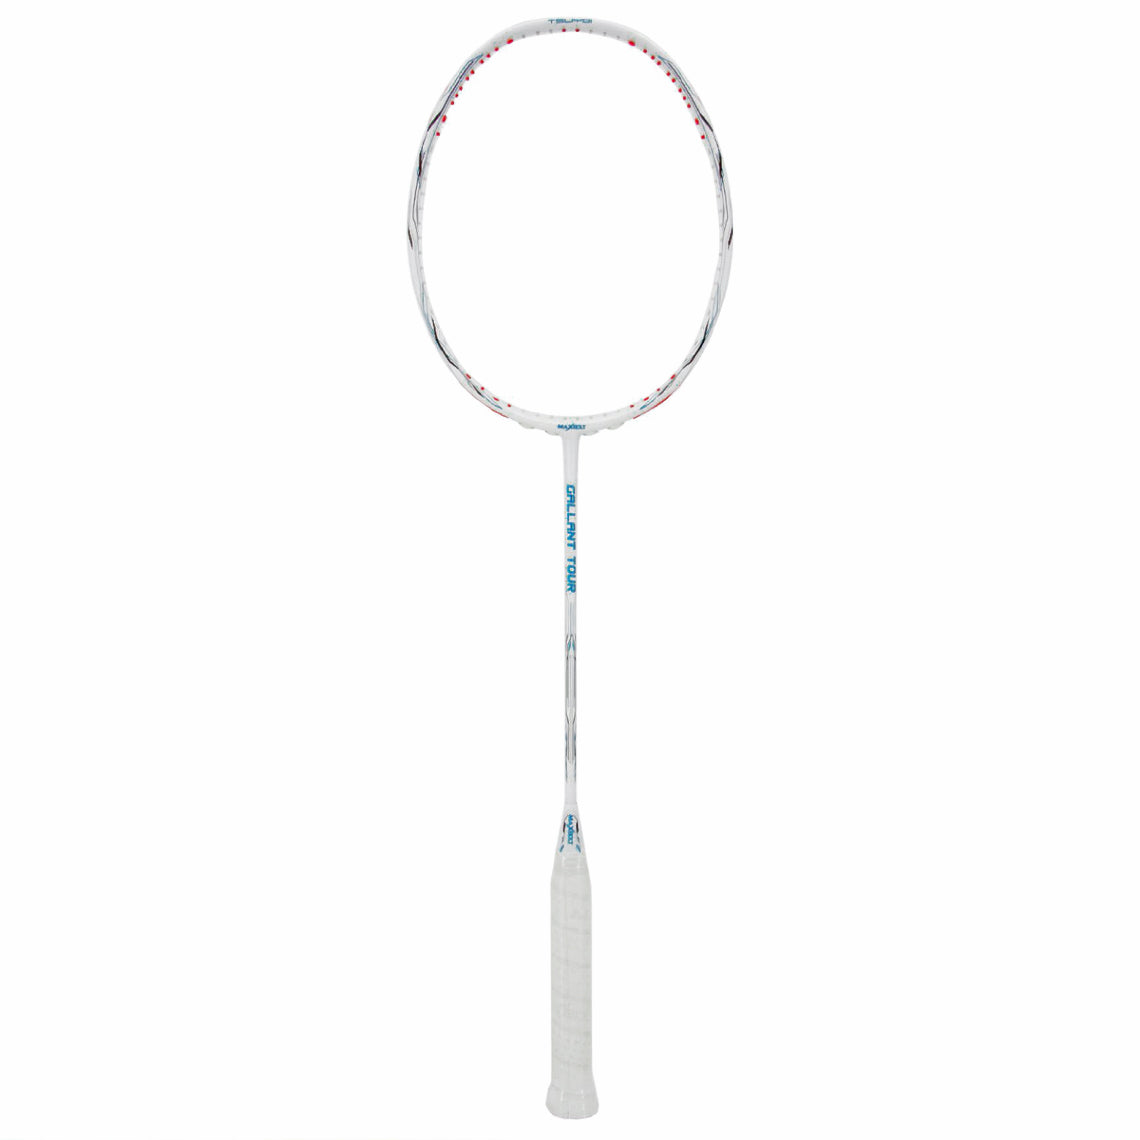 Maxbolt Gallant Tour Unstrung Badminton Racquet - Best Price online Prokicksports.com